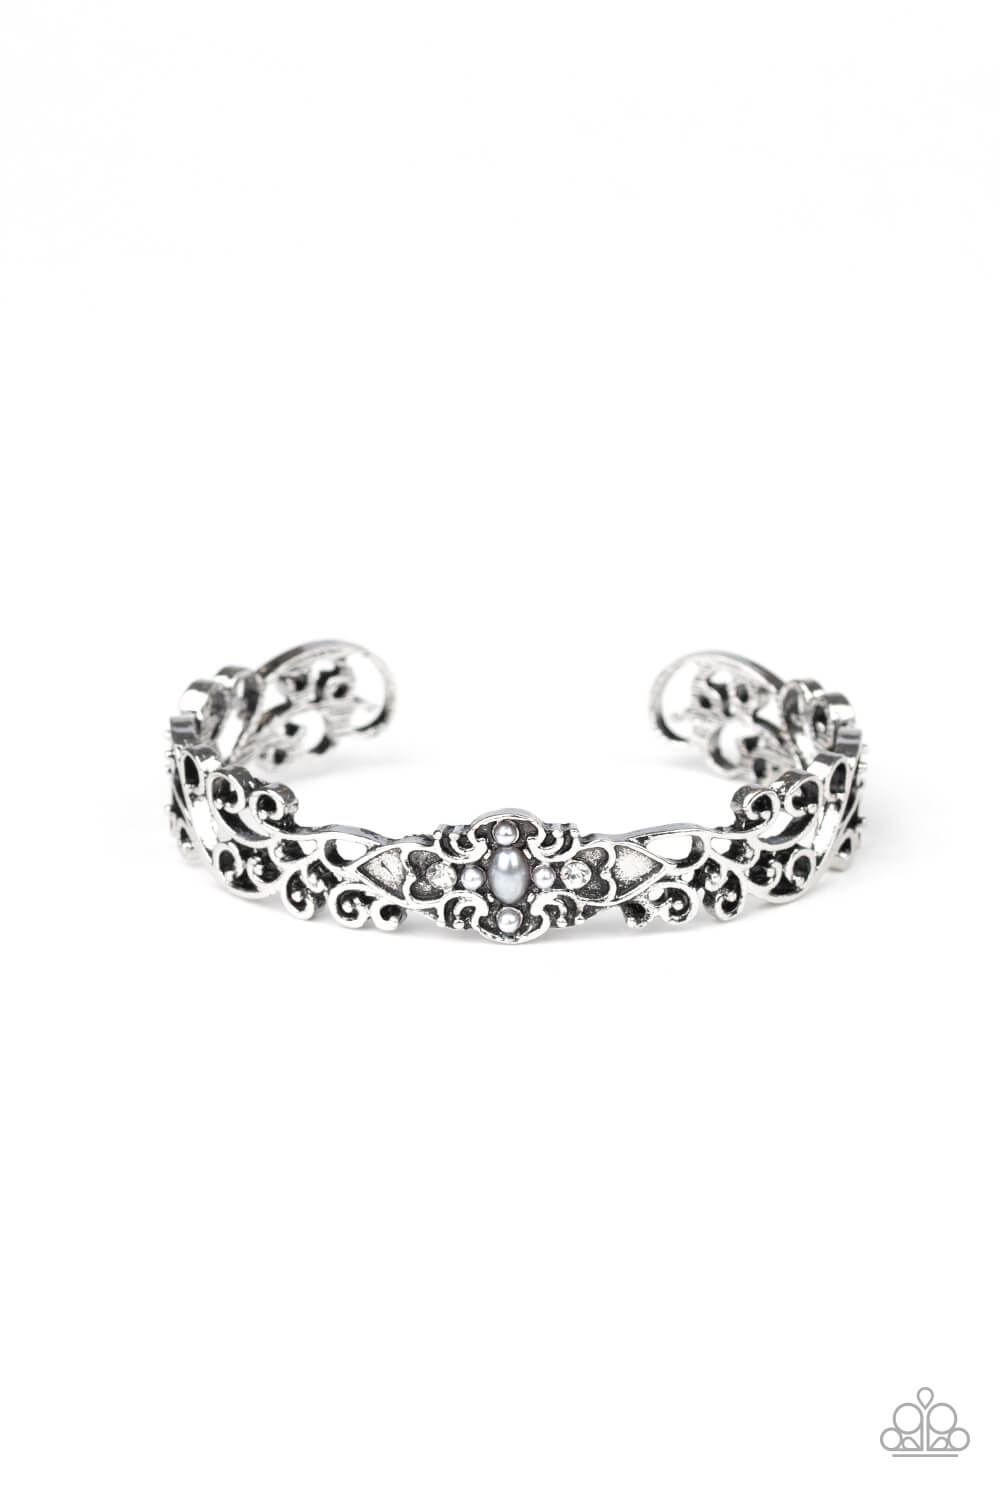 Victorian Vines - Silver Bracelet - Princess Glam Shop